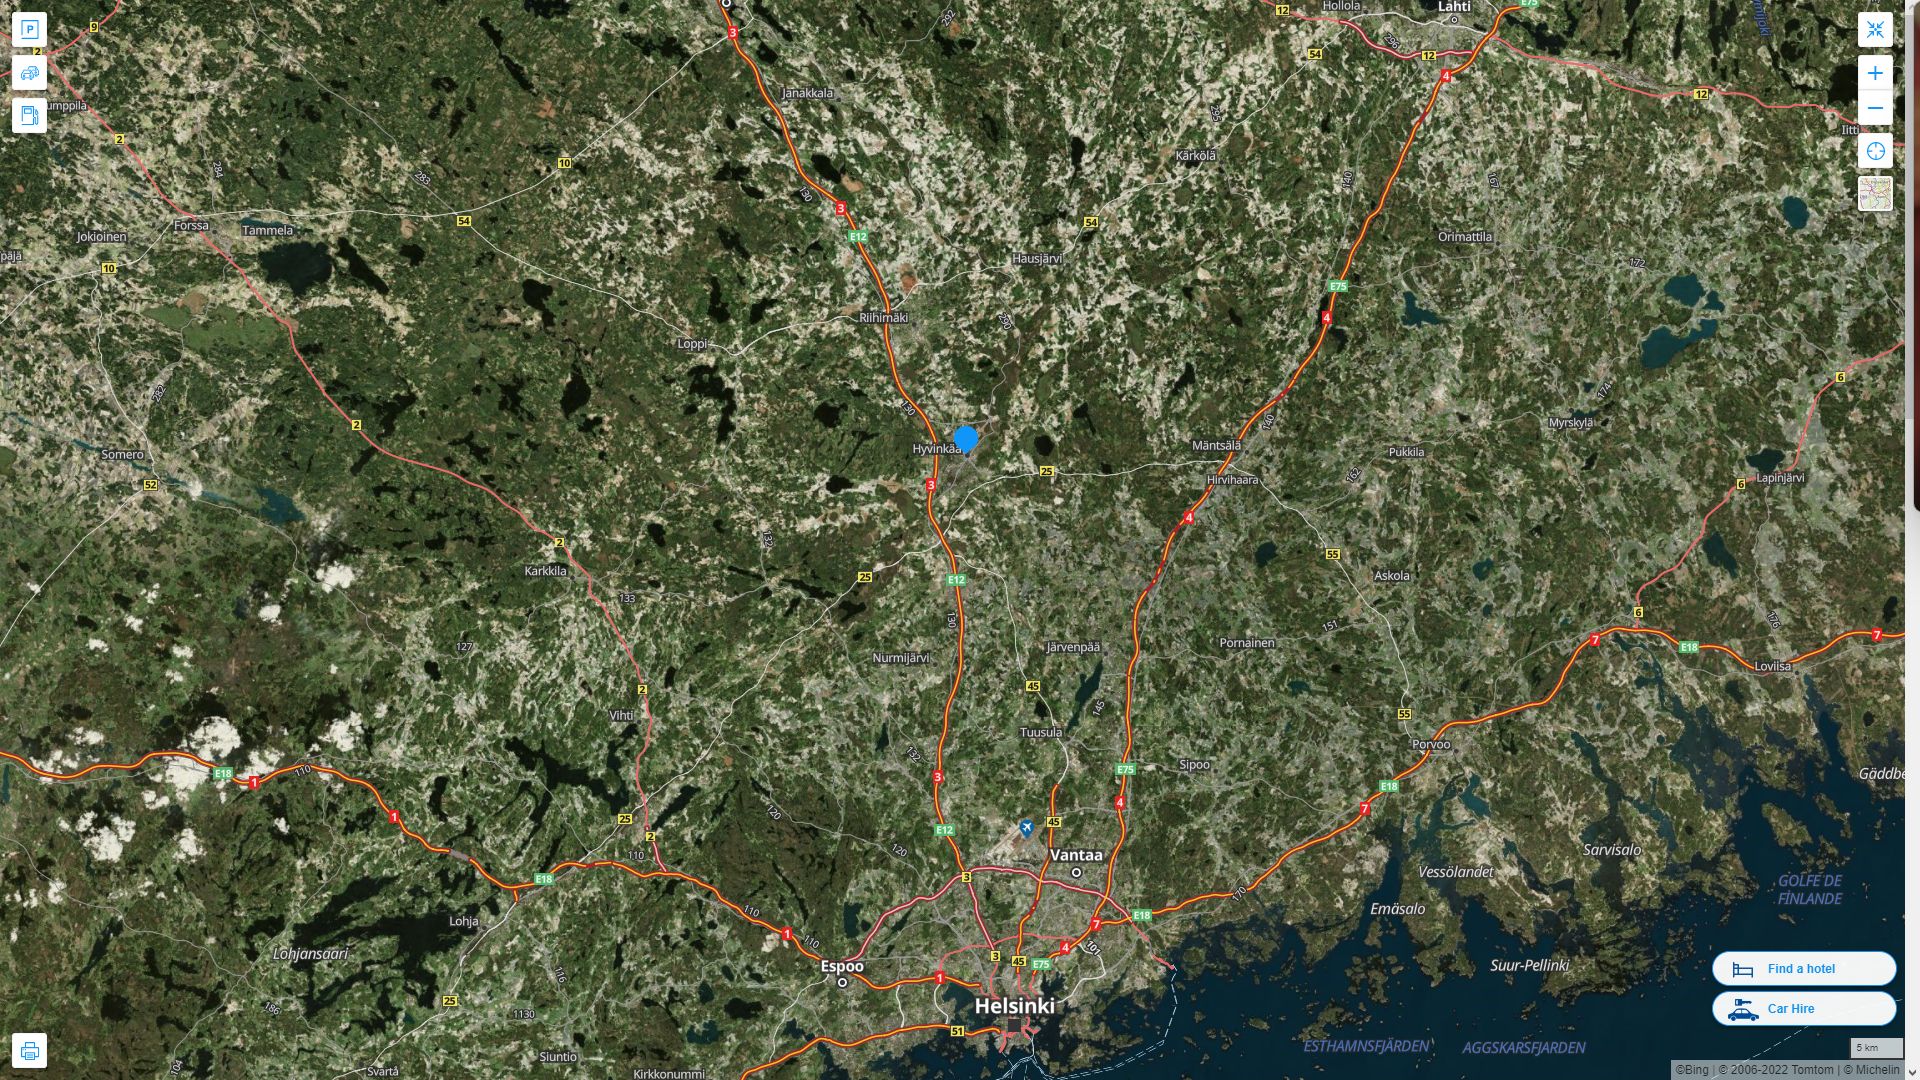 Hyvinkaa Finlande Autoroute et carte routiere avec vue satellite